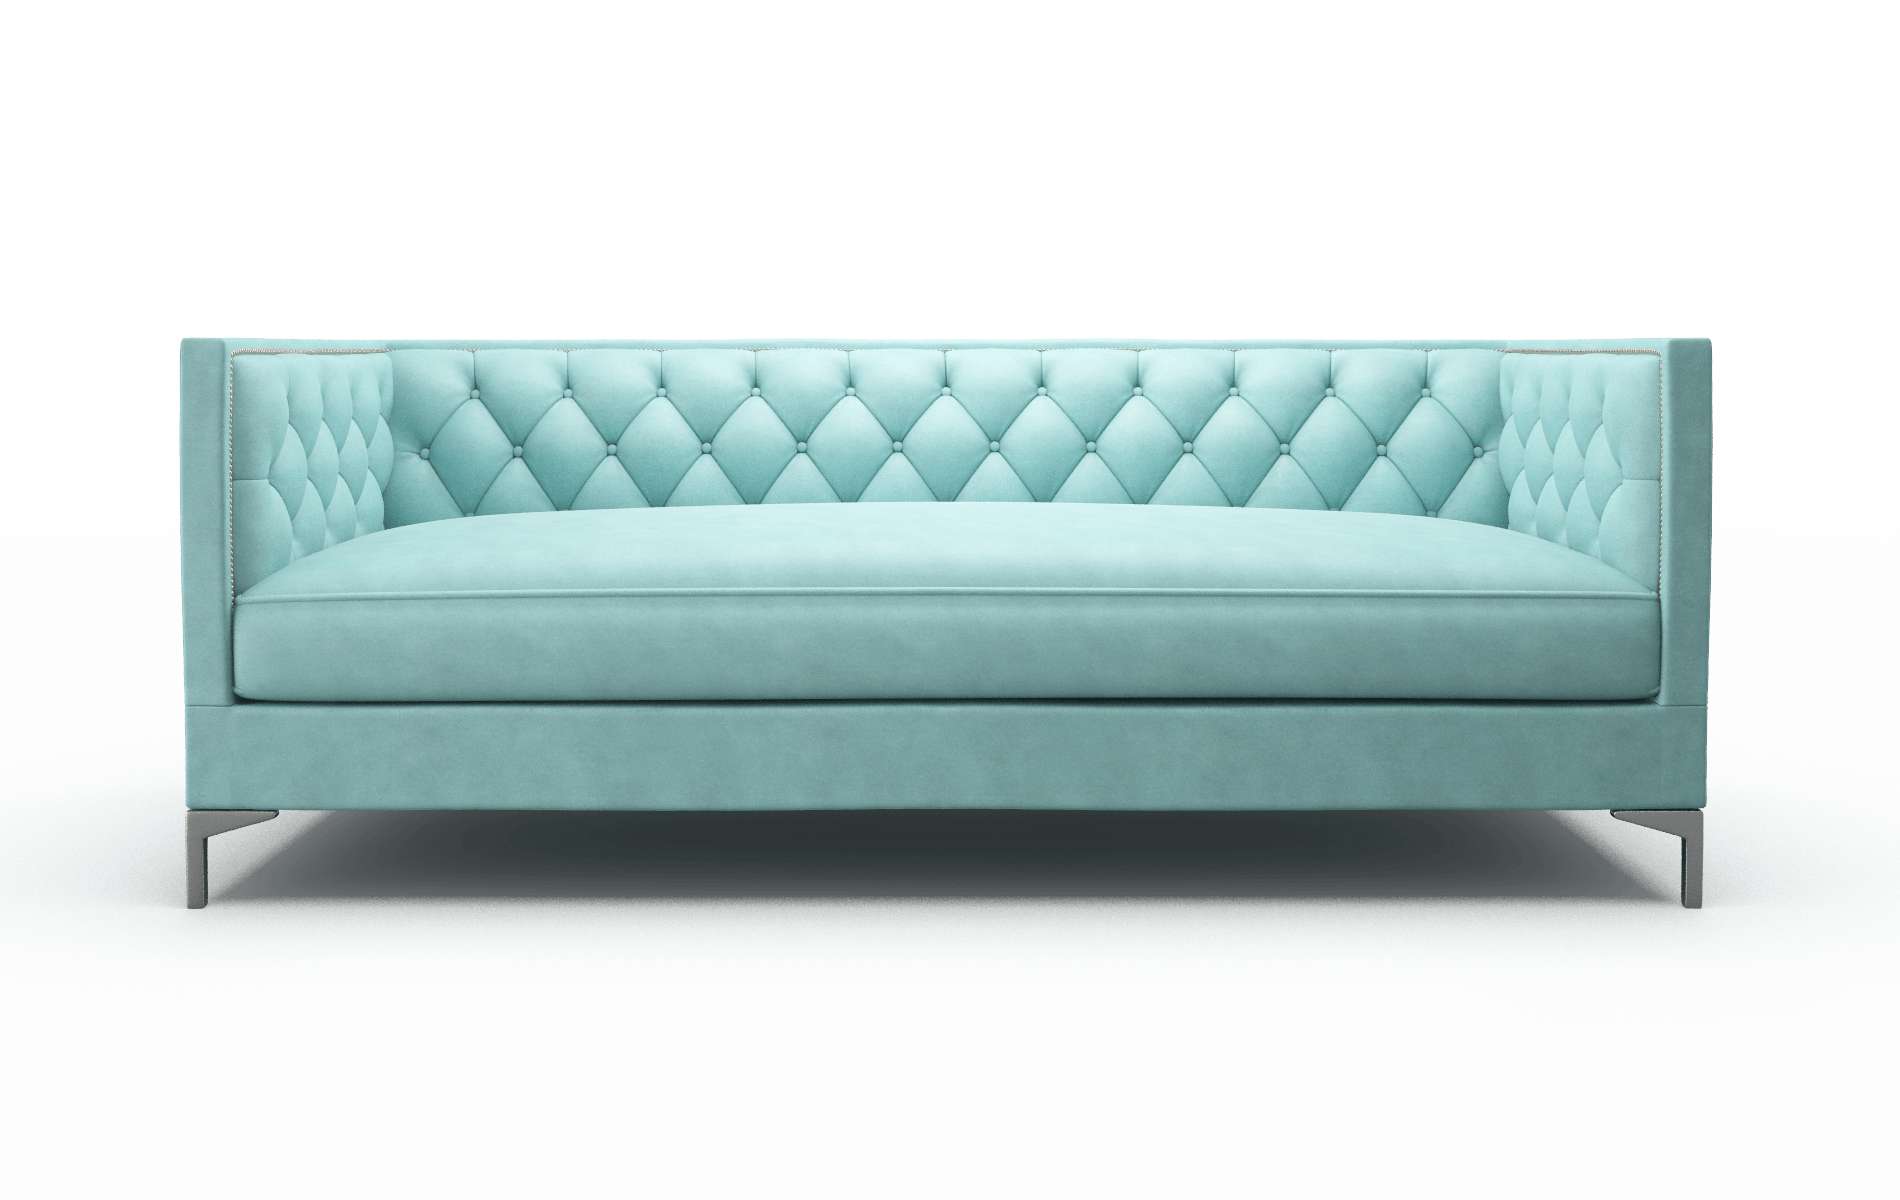 Gosford Curious Turquoise Sofa metal legs 1